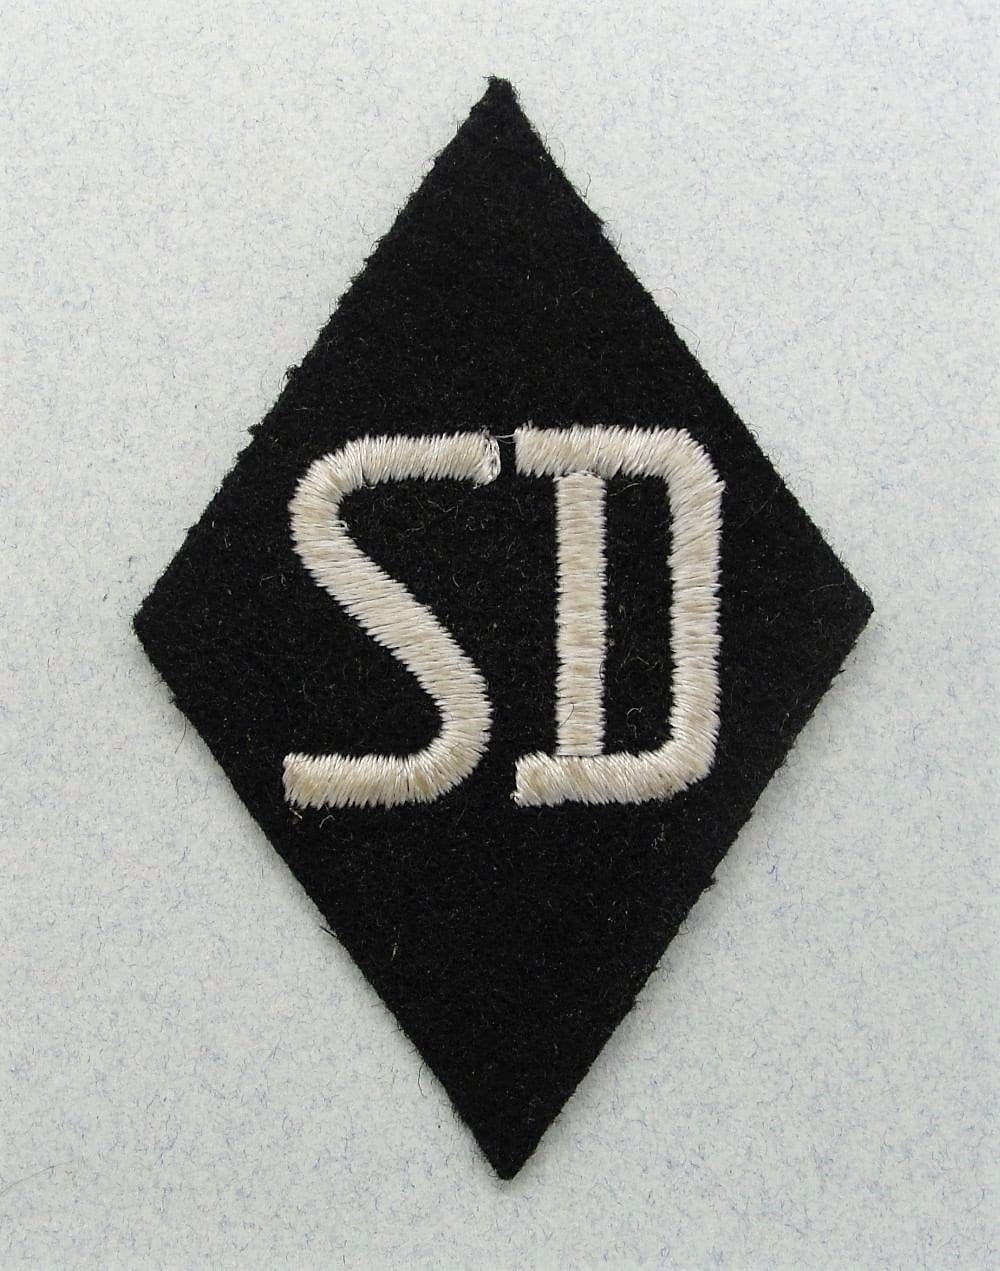 SS SD (Security Service) EM/NCO's Sleeve Diamond with SS RZM Tag